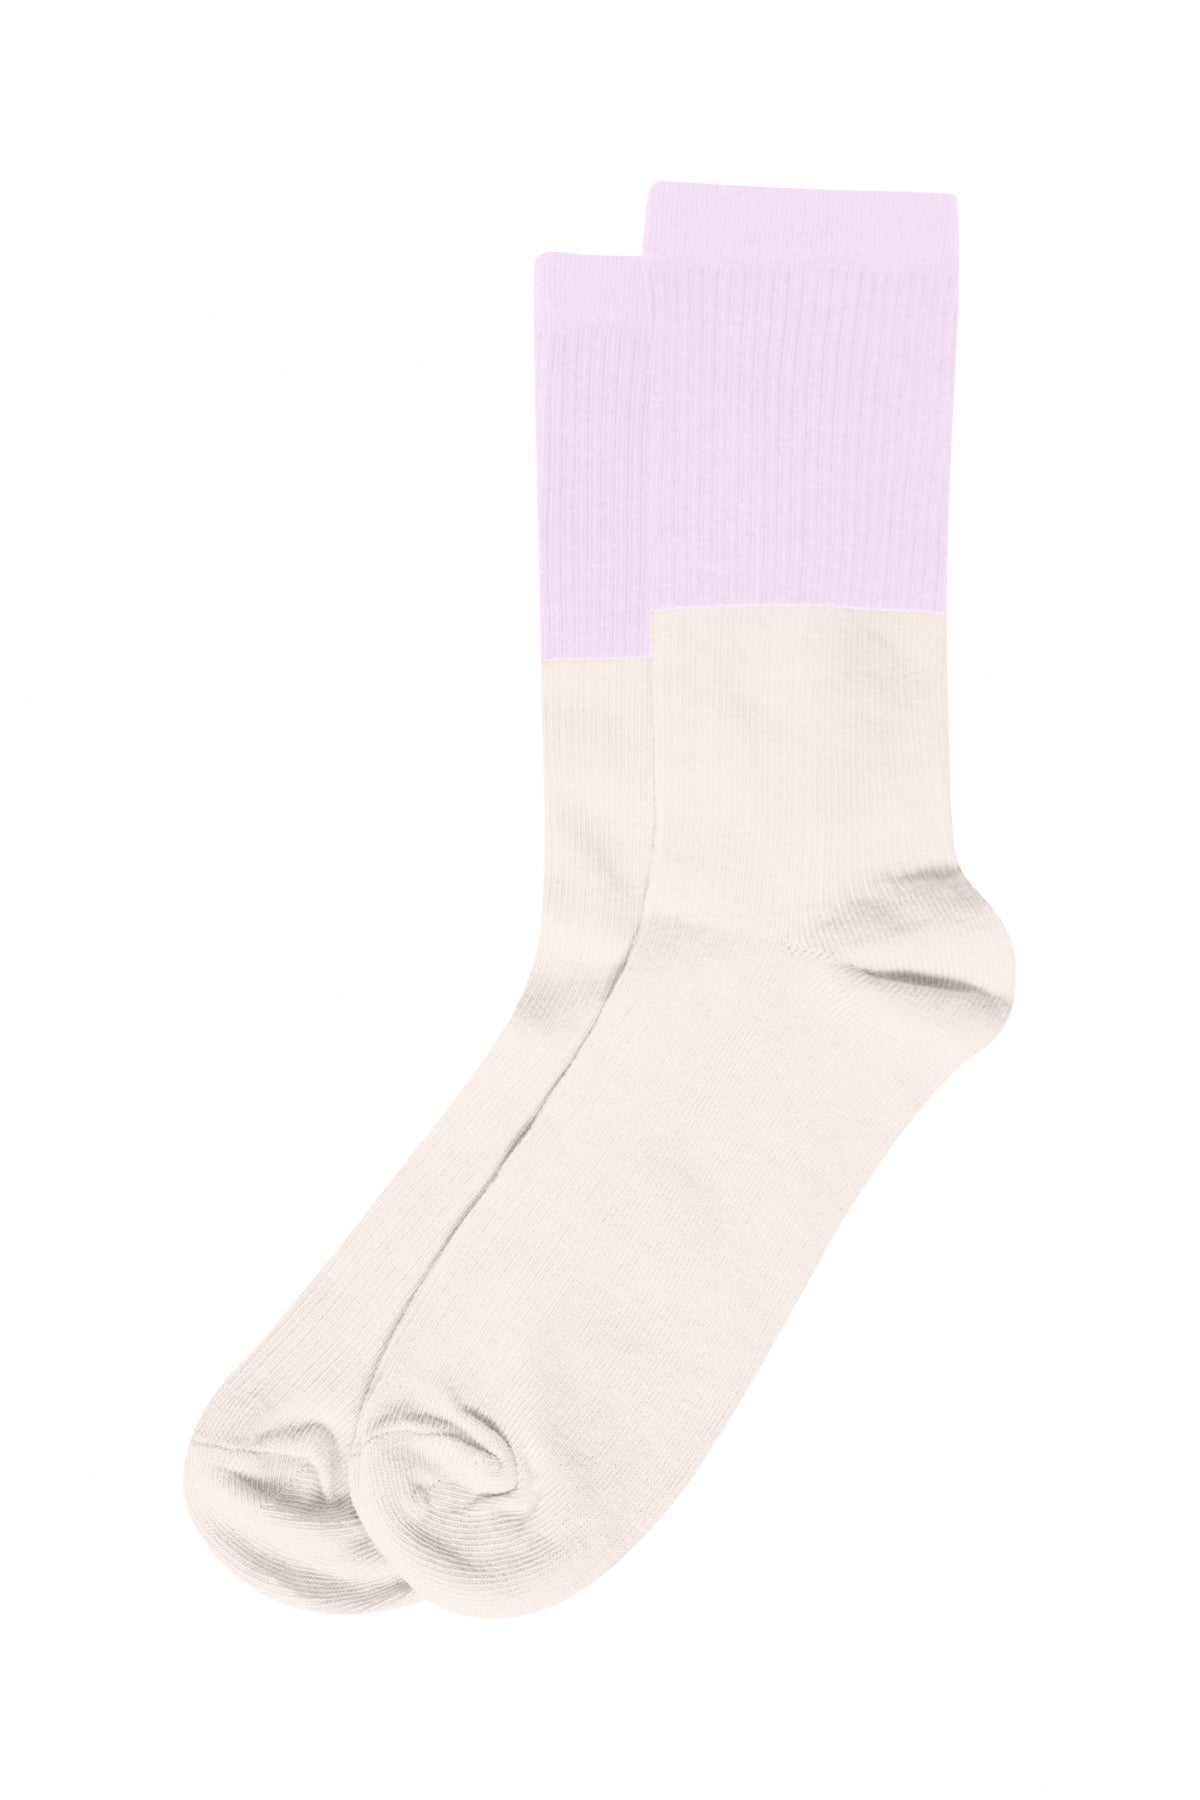 ICHI - Socken Asahan Lavender